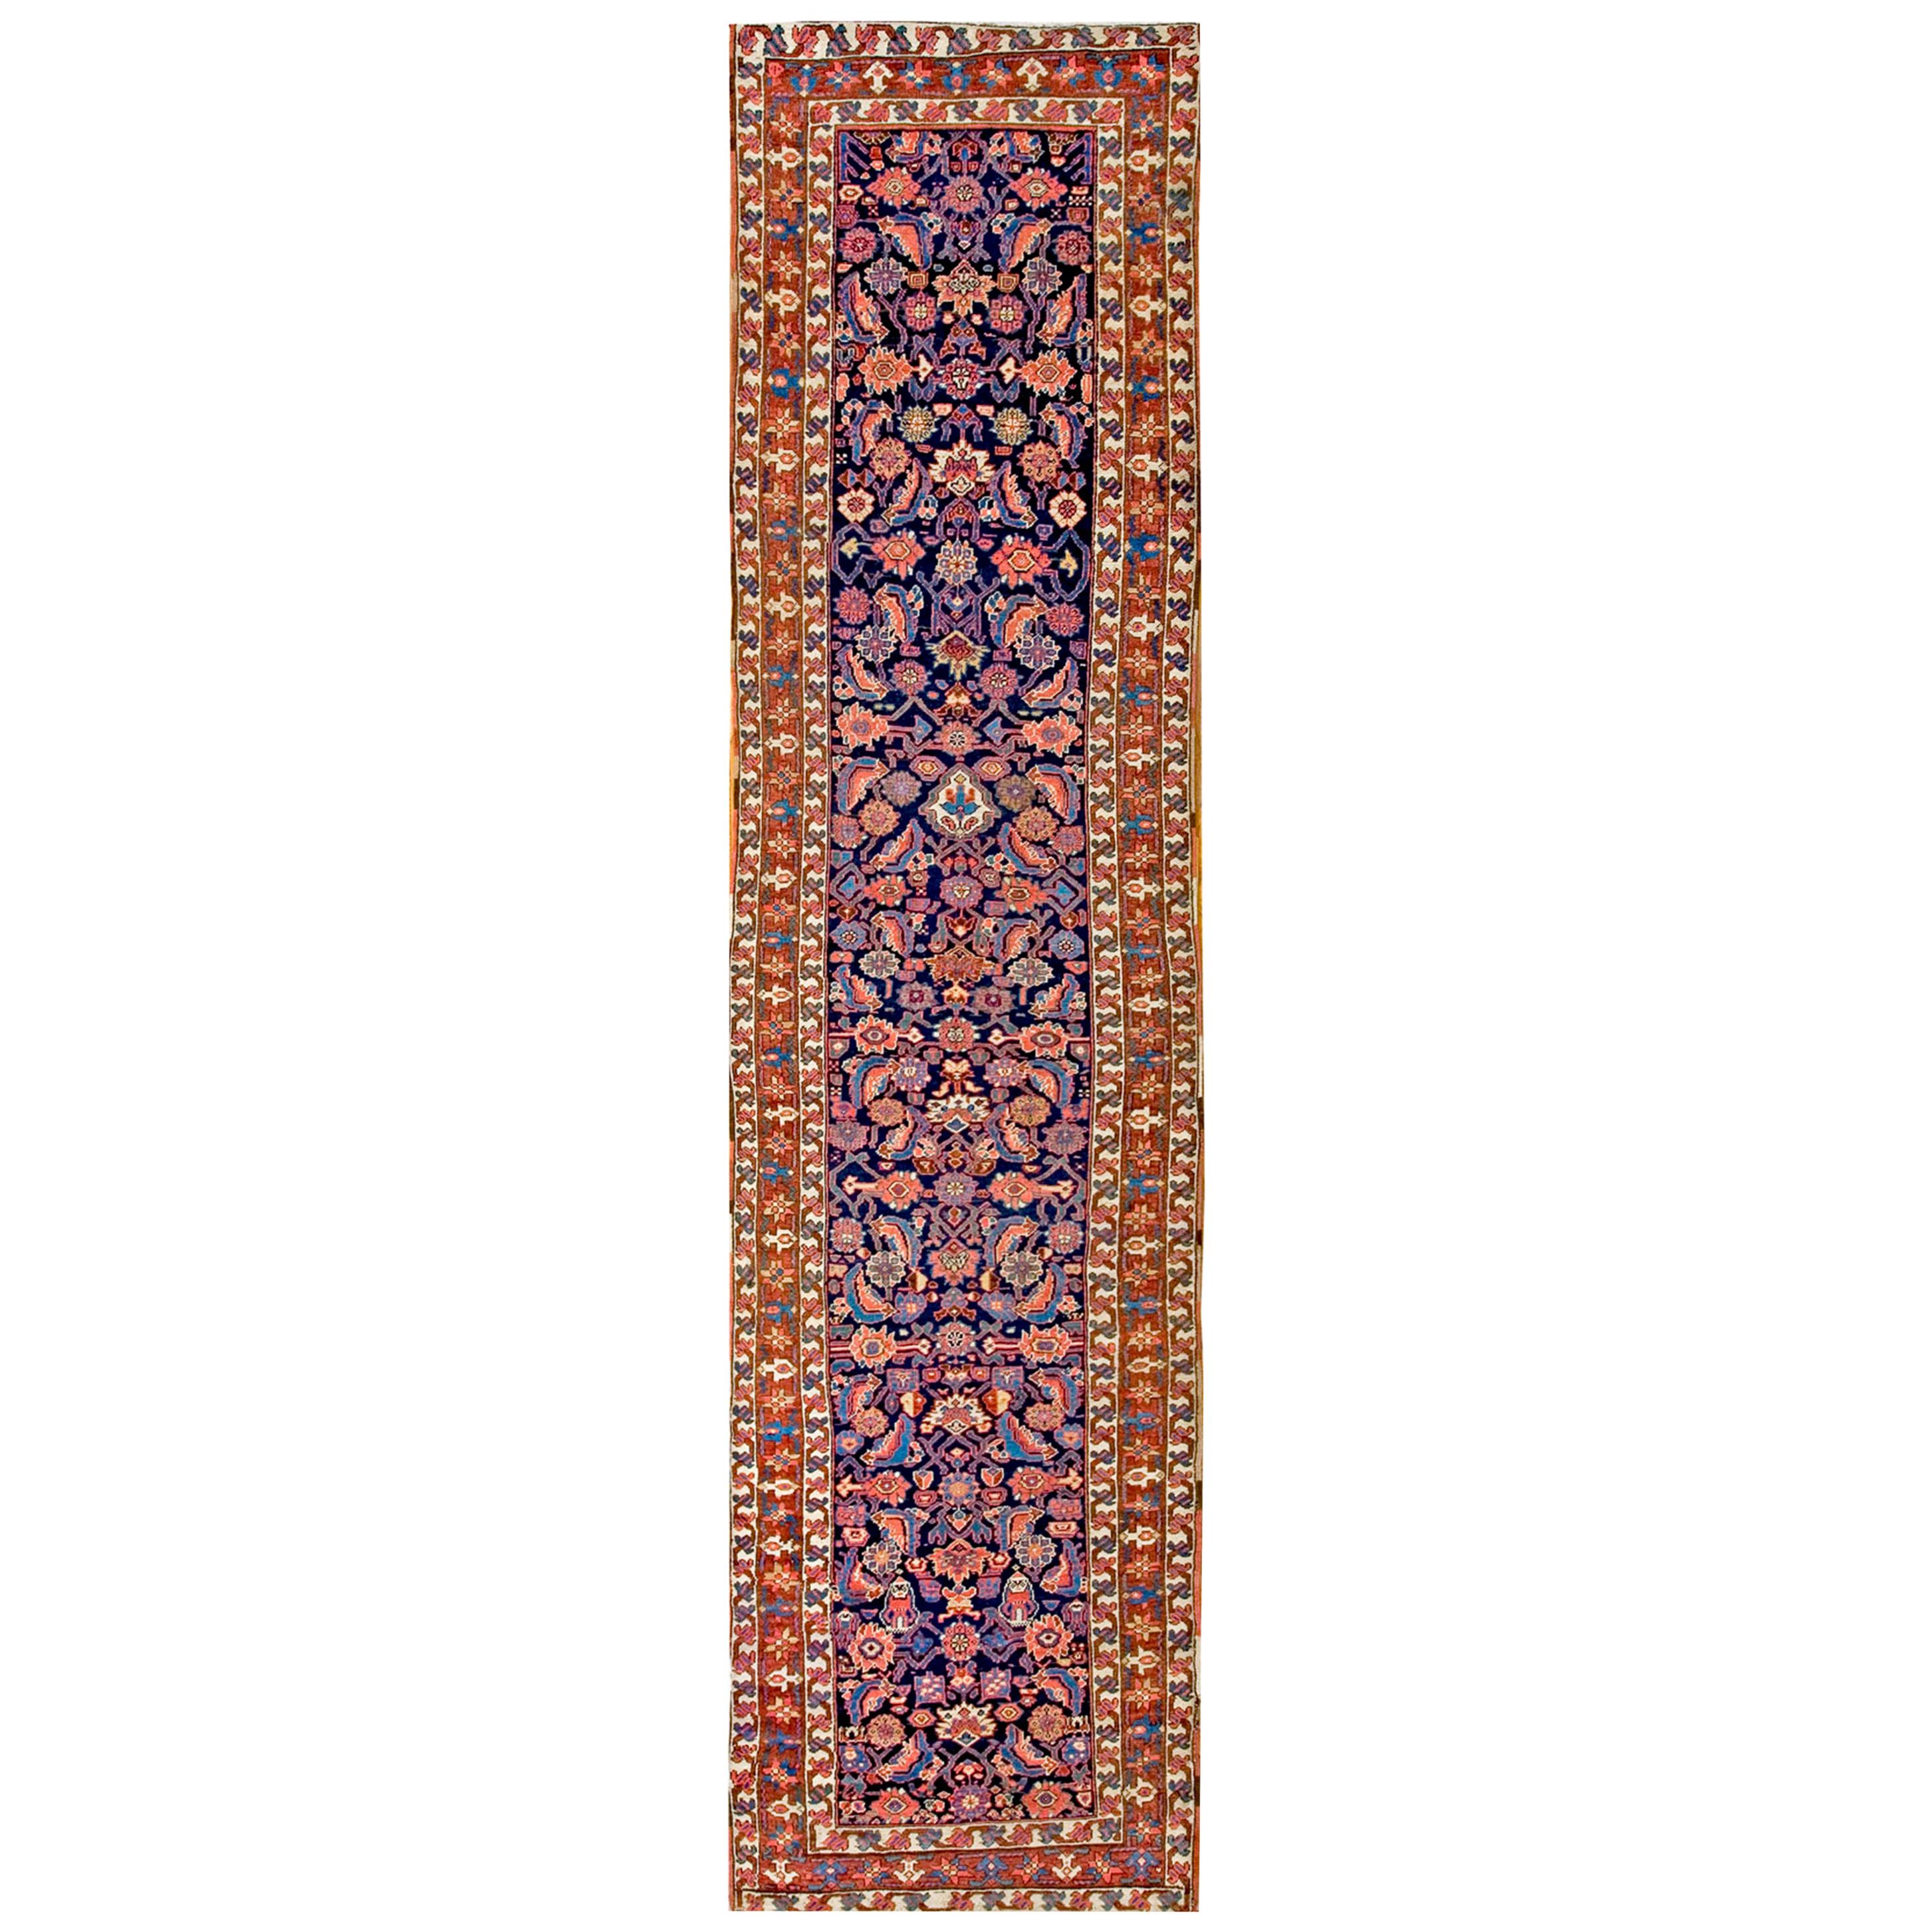 Early 20th Century N.W. Persian Bakshaiesh Runner Carpet ( 3'6" x 14'6" ) For Sale